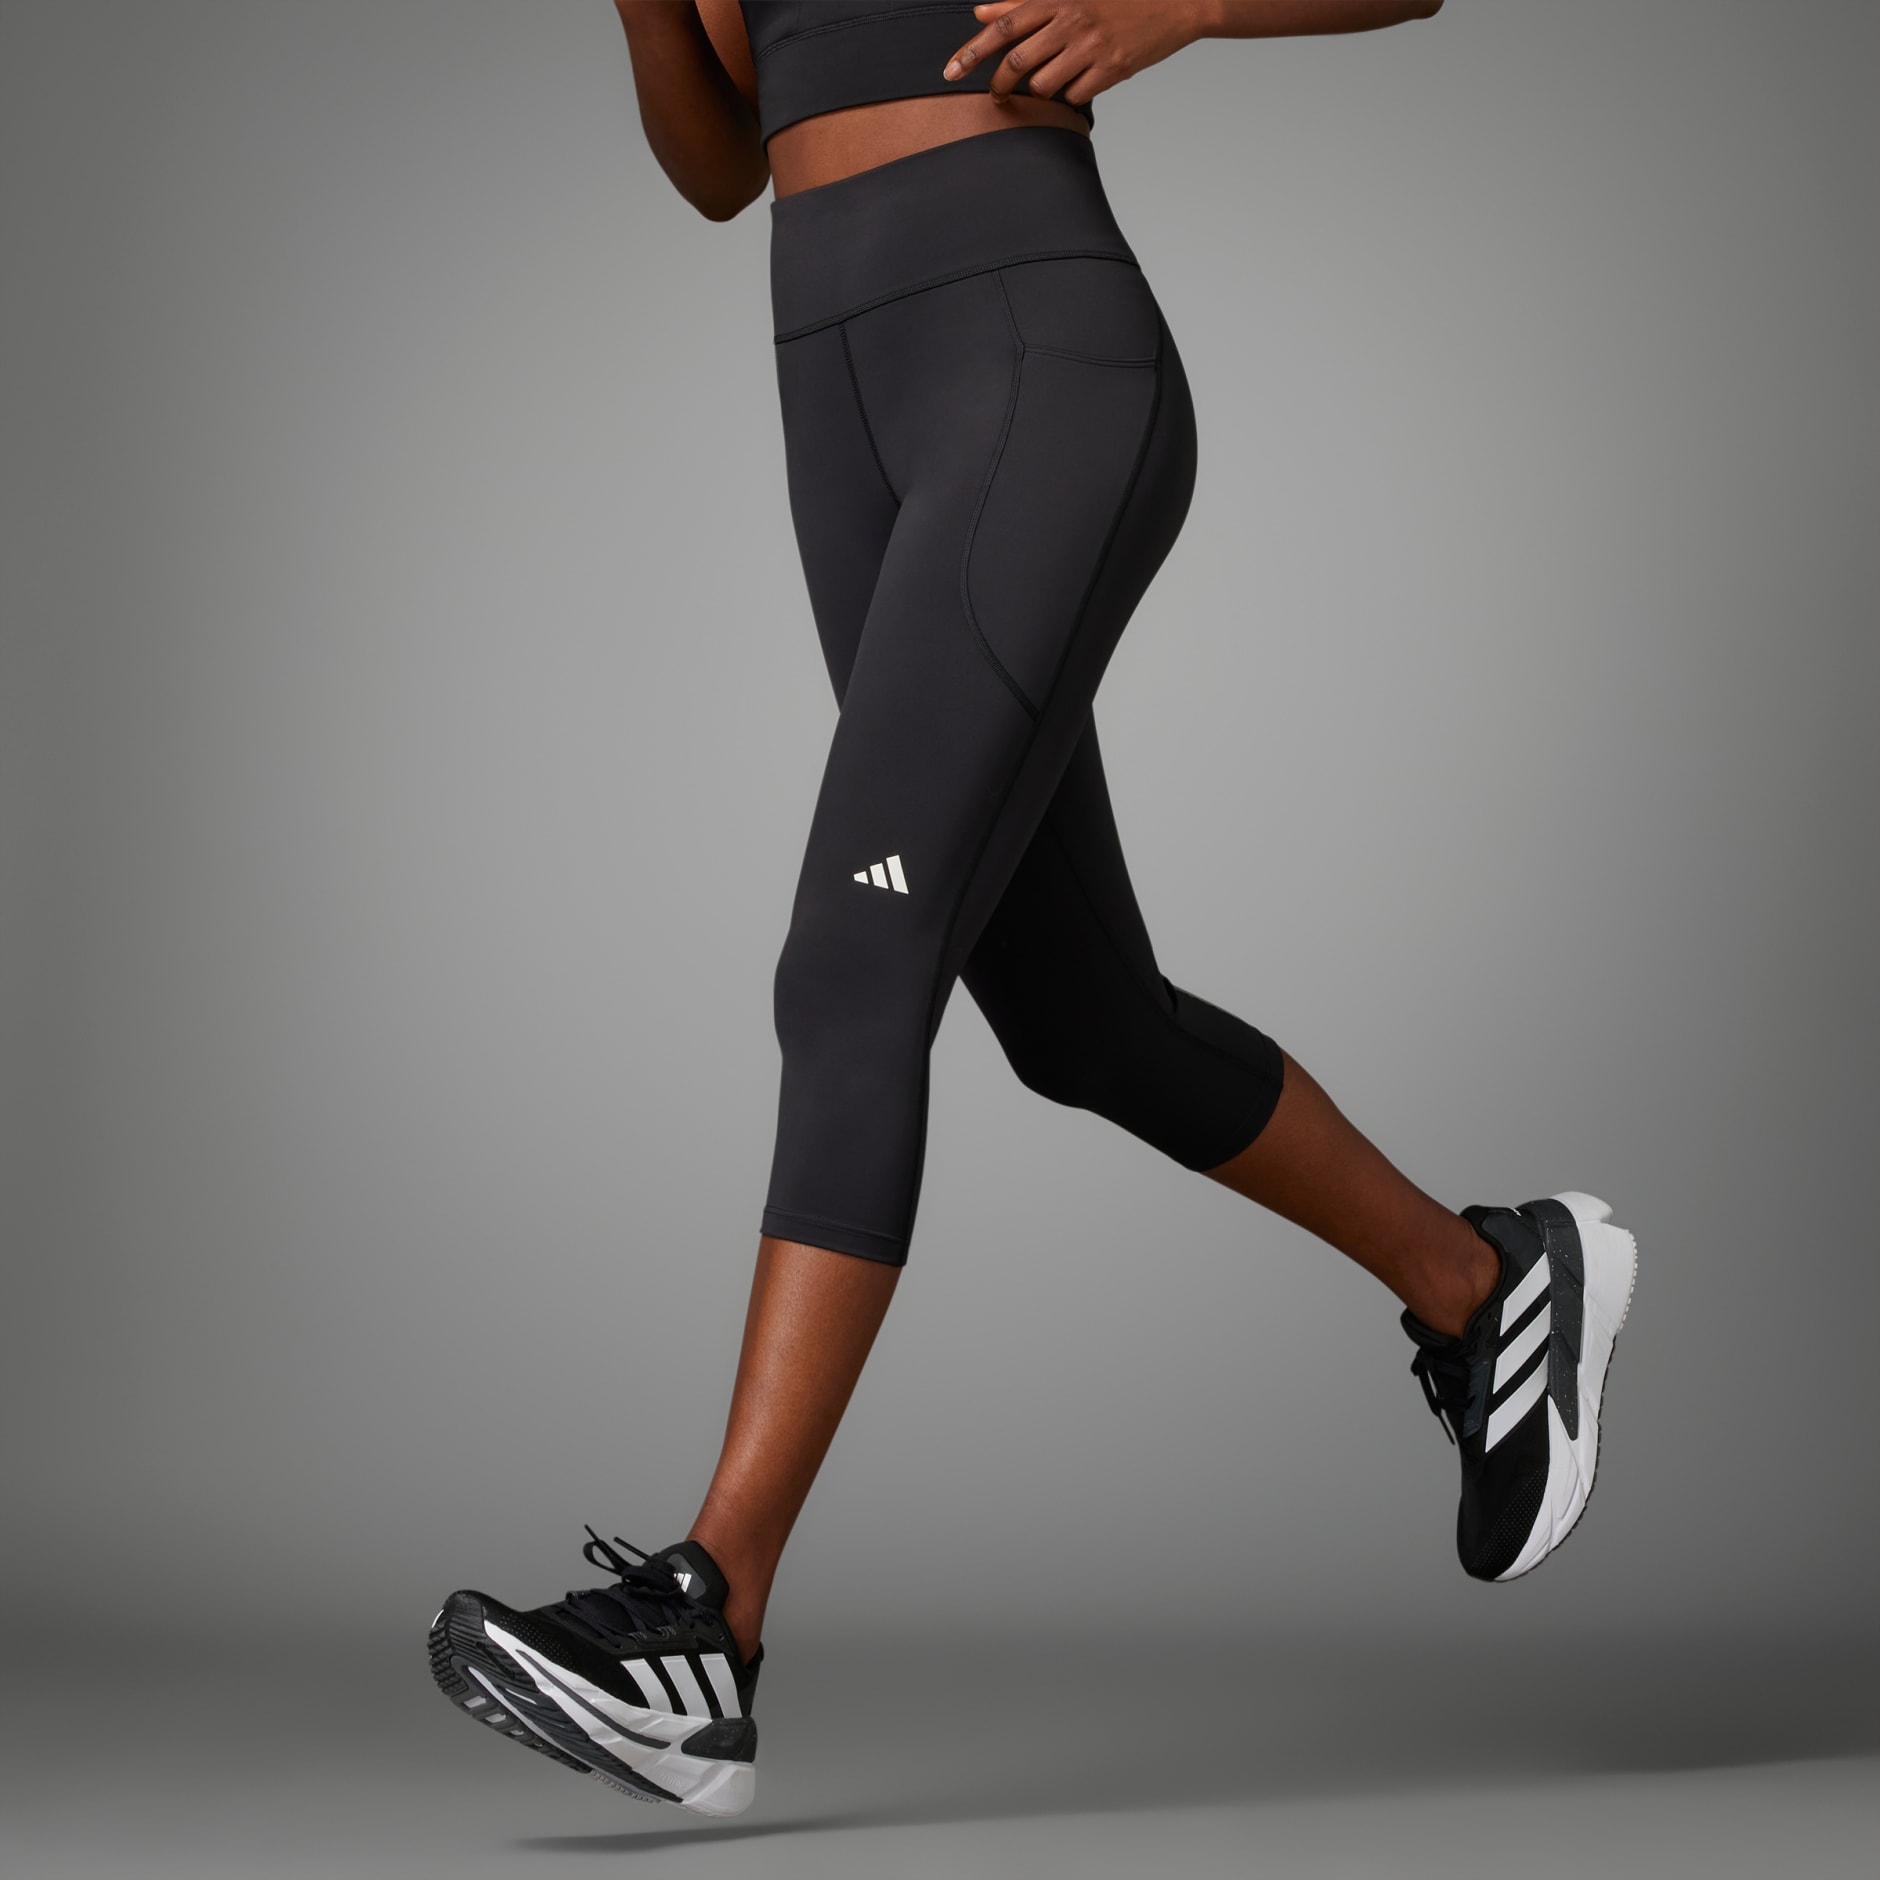 Adidas Dailyrun 3/4 Tights - Running tights Women's